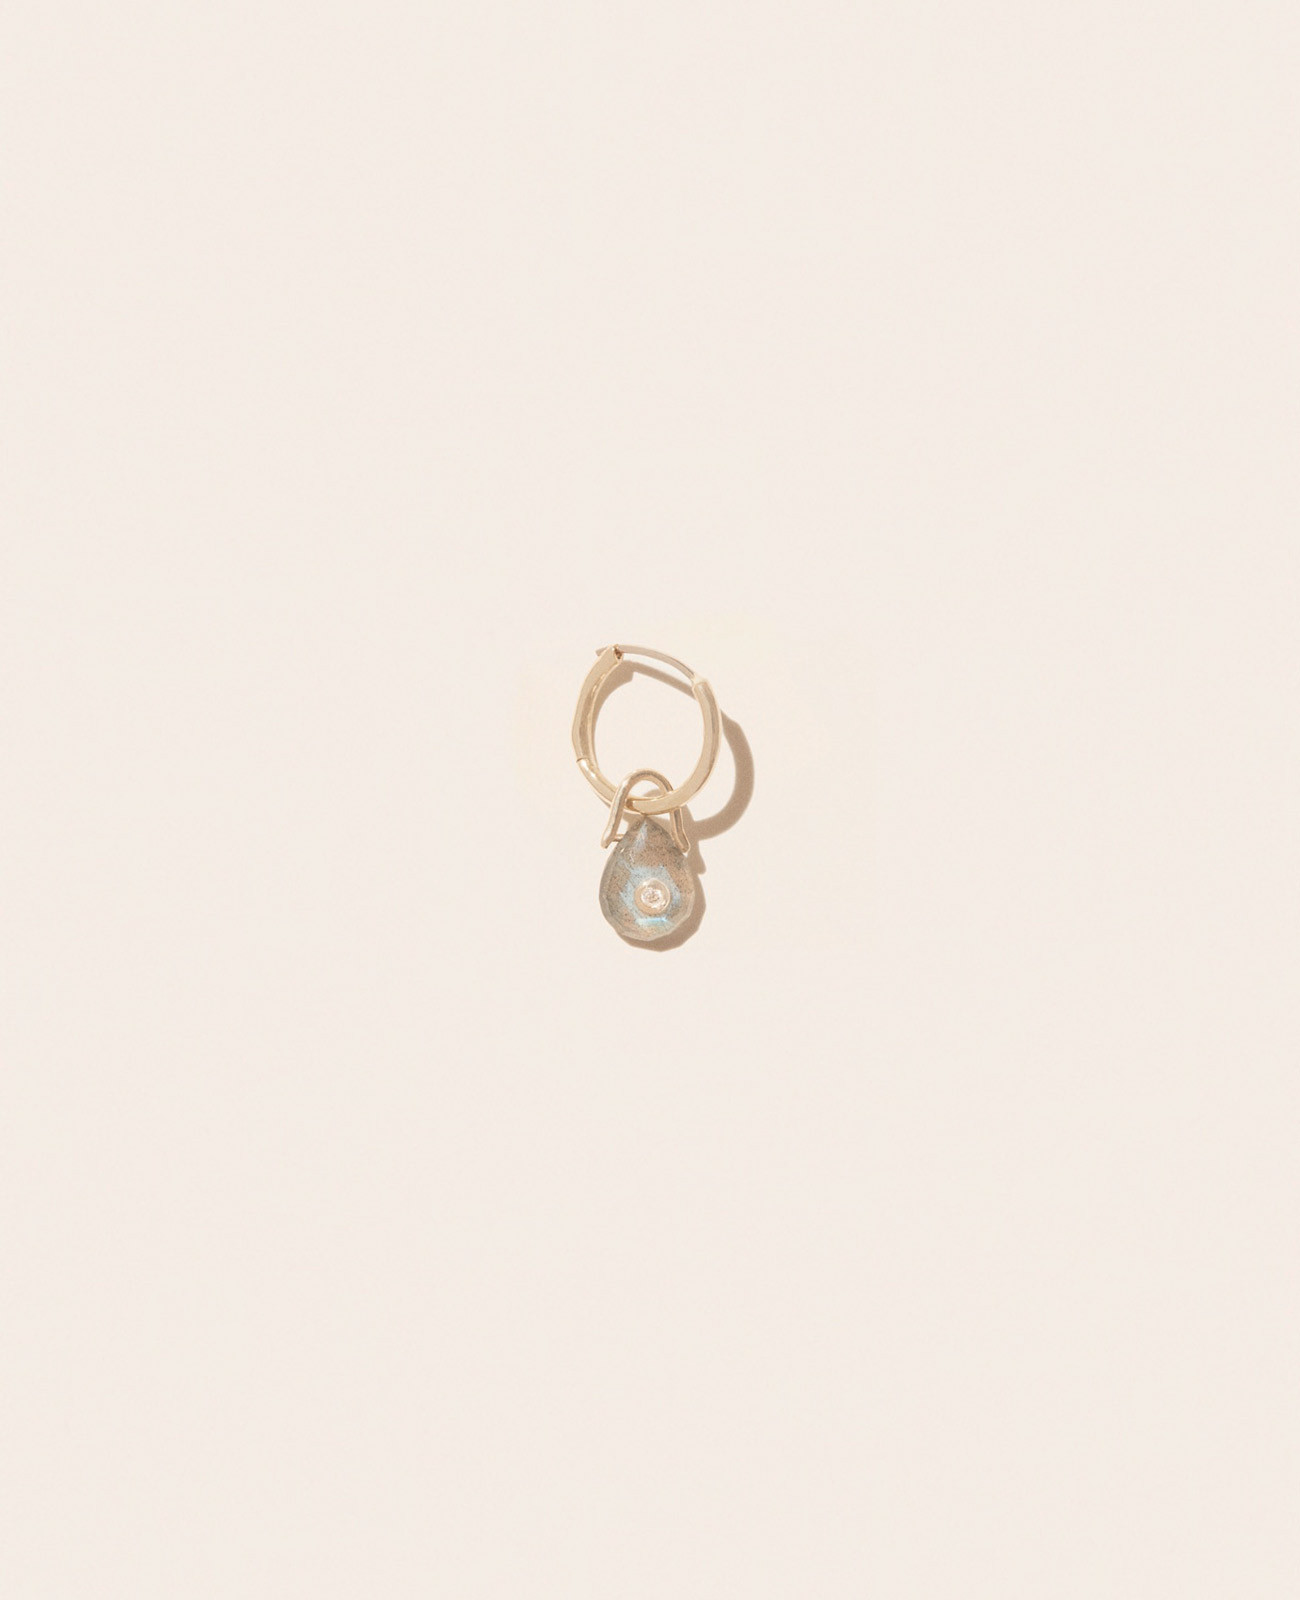 ORSO LABRADORITE earring pascale monvoisin jewelry paris